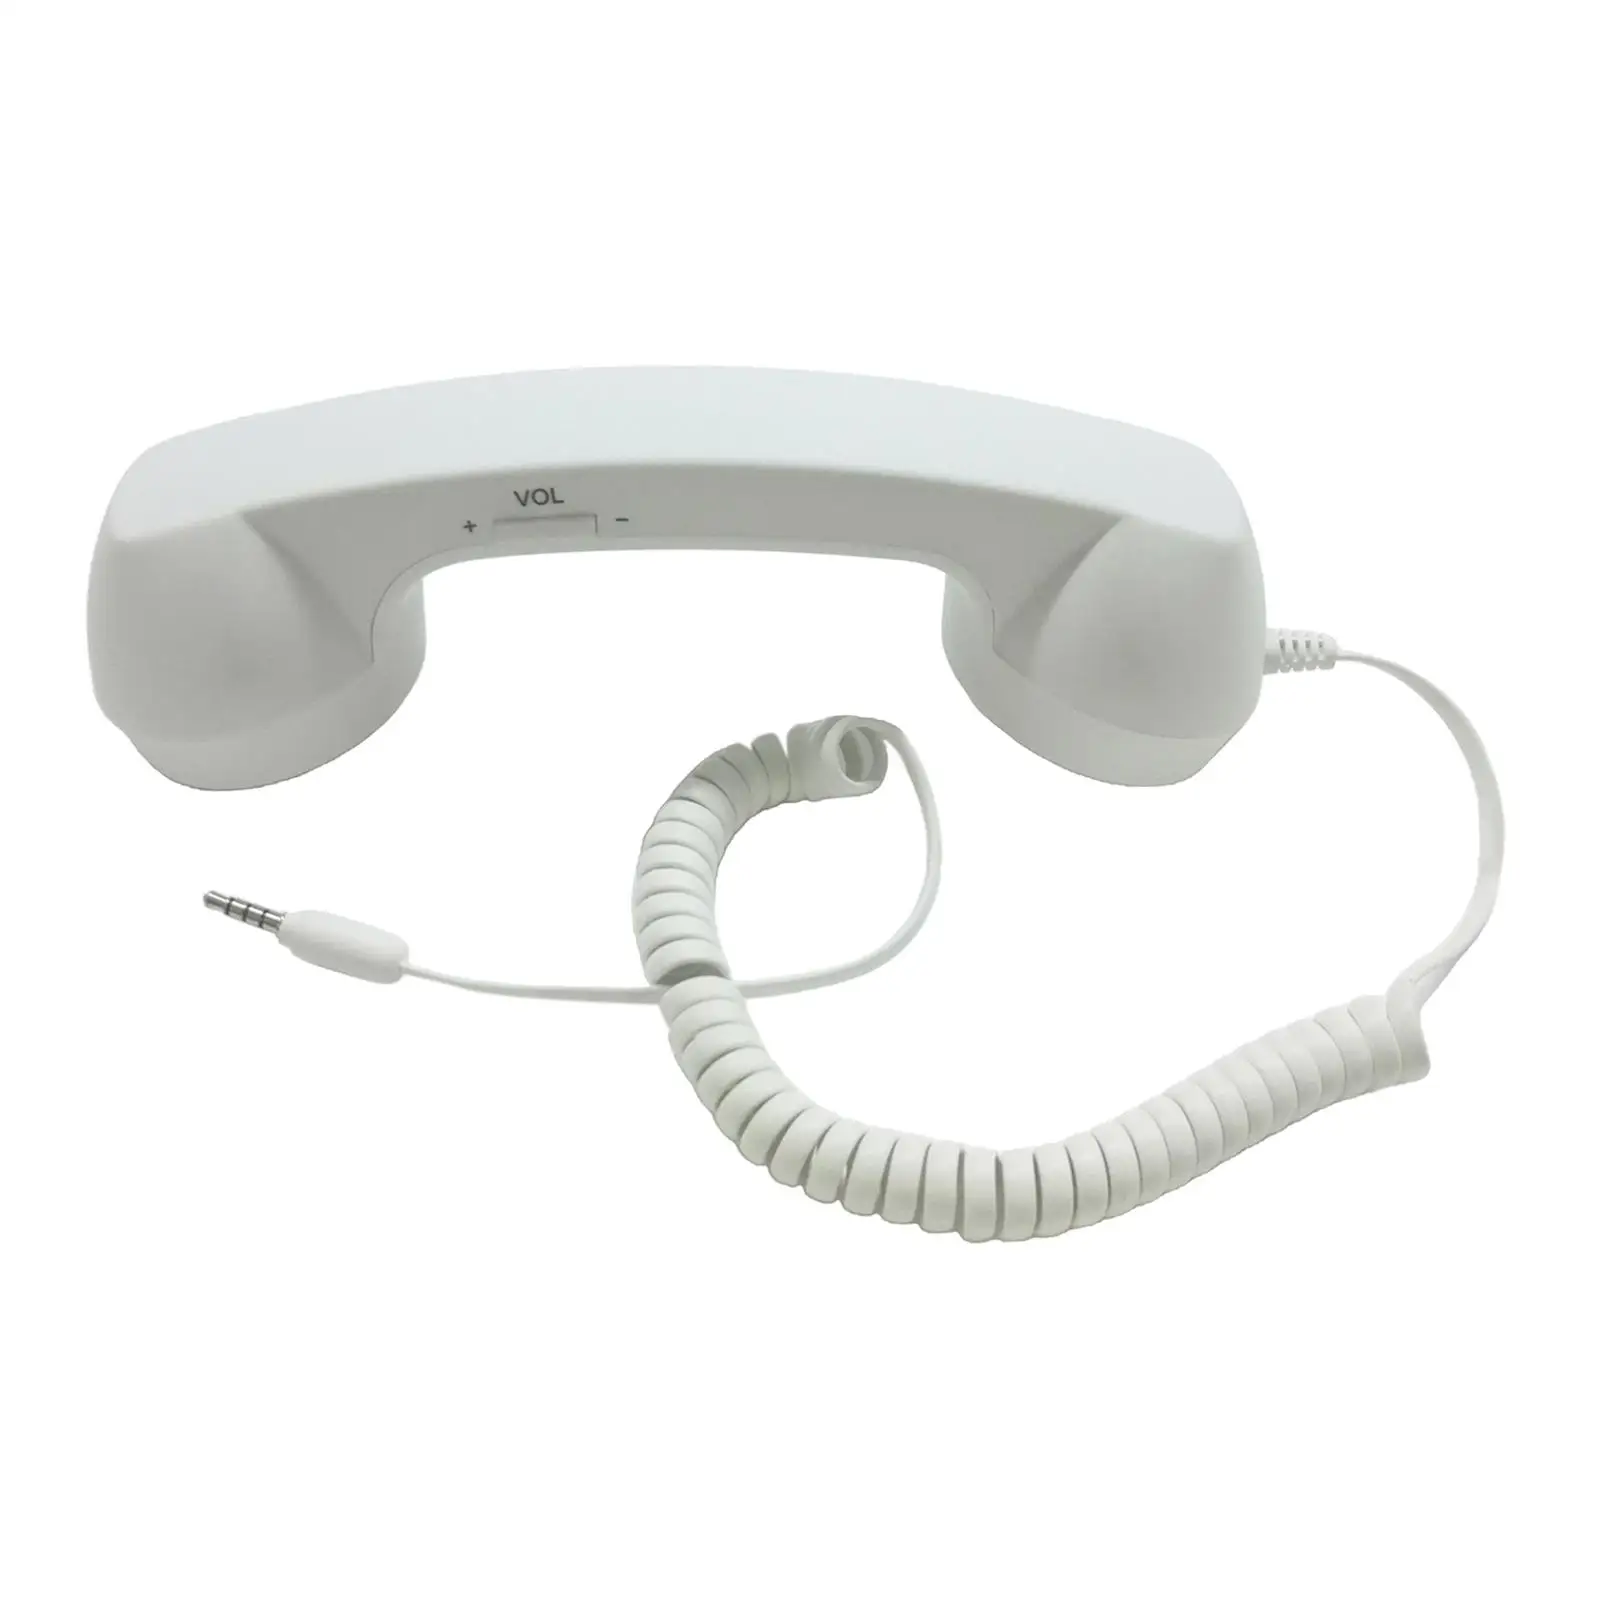 Retro Telephone Handset 3.5mm Stylish Comfort Classic Radiation Proof Handset Receiver Mic Speaker for iPhone Smartphone